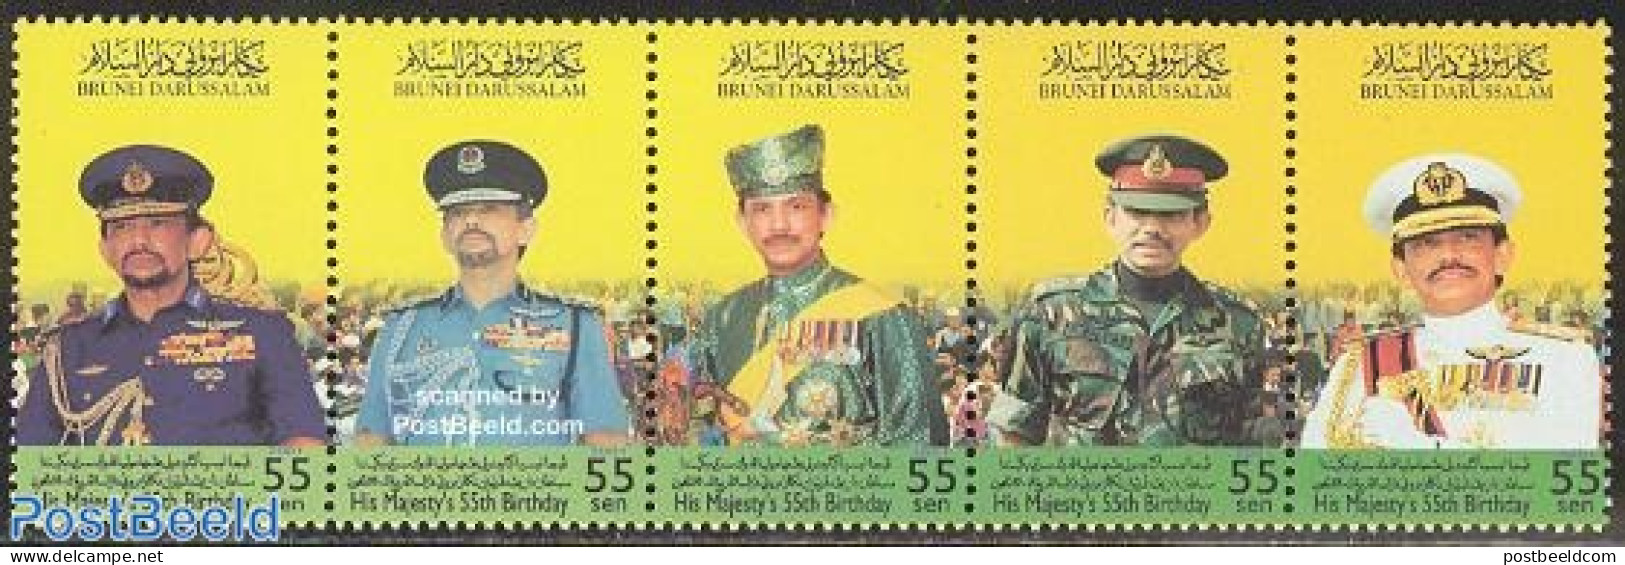 Brunei 2001 King 55th Birthday 5v [::::], Mint NH, History - Various - Kings & Queens (Royalty) - Uniforms - Royalties, Royals